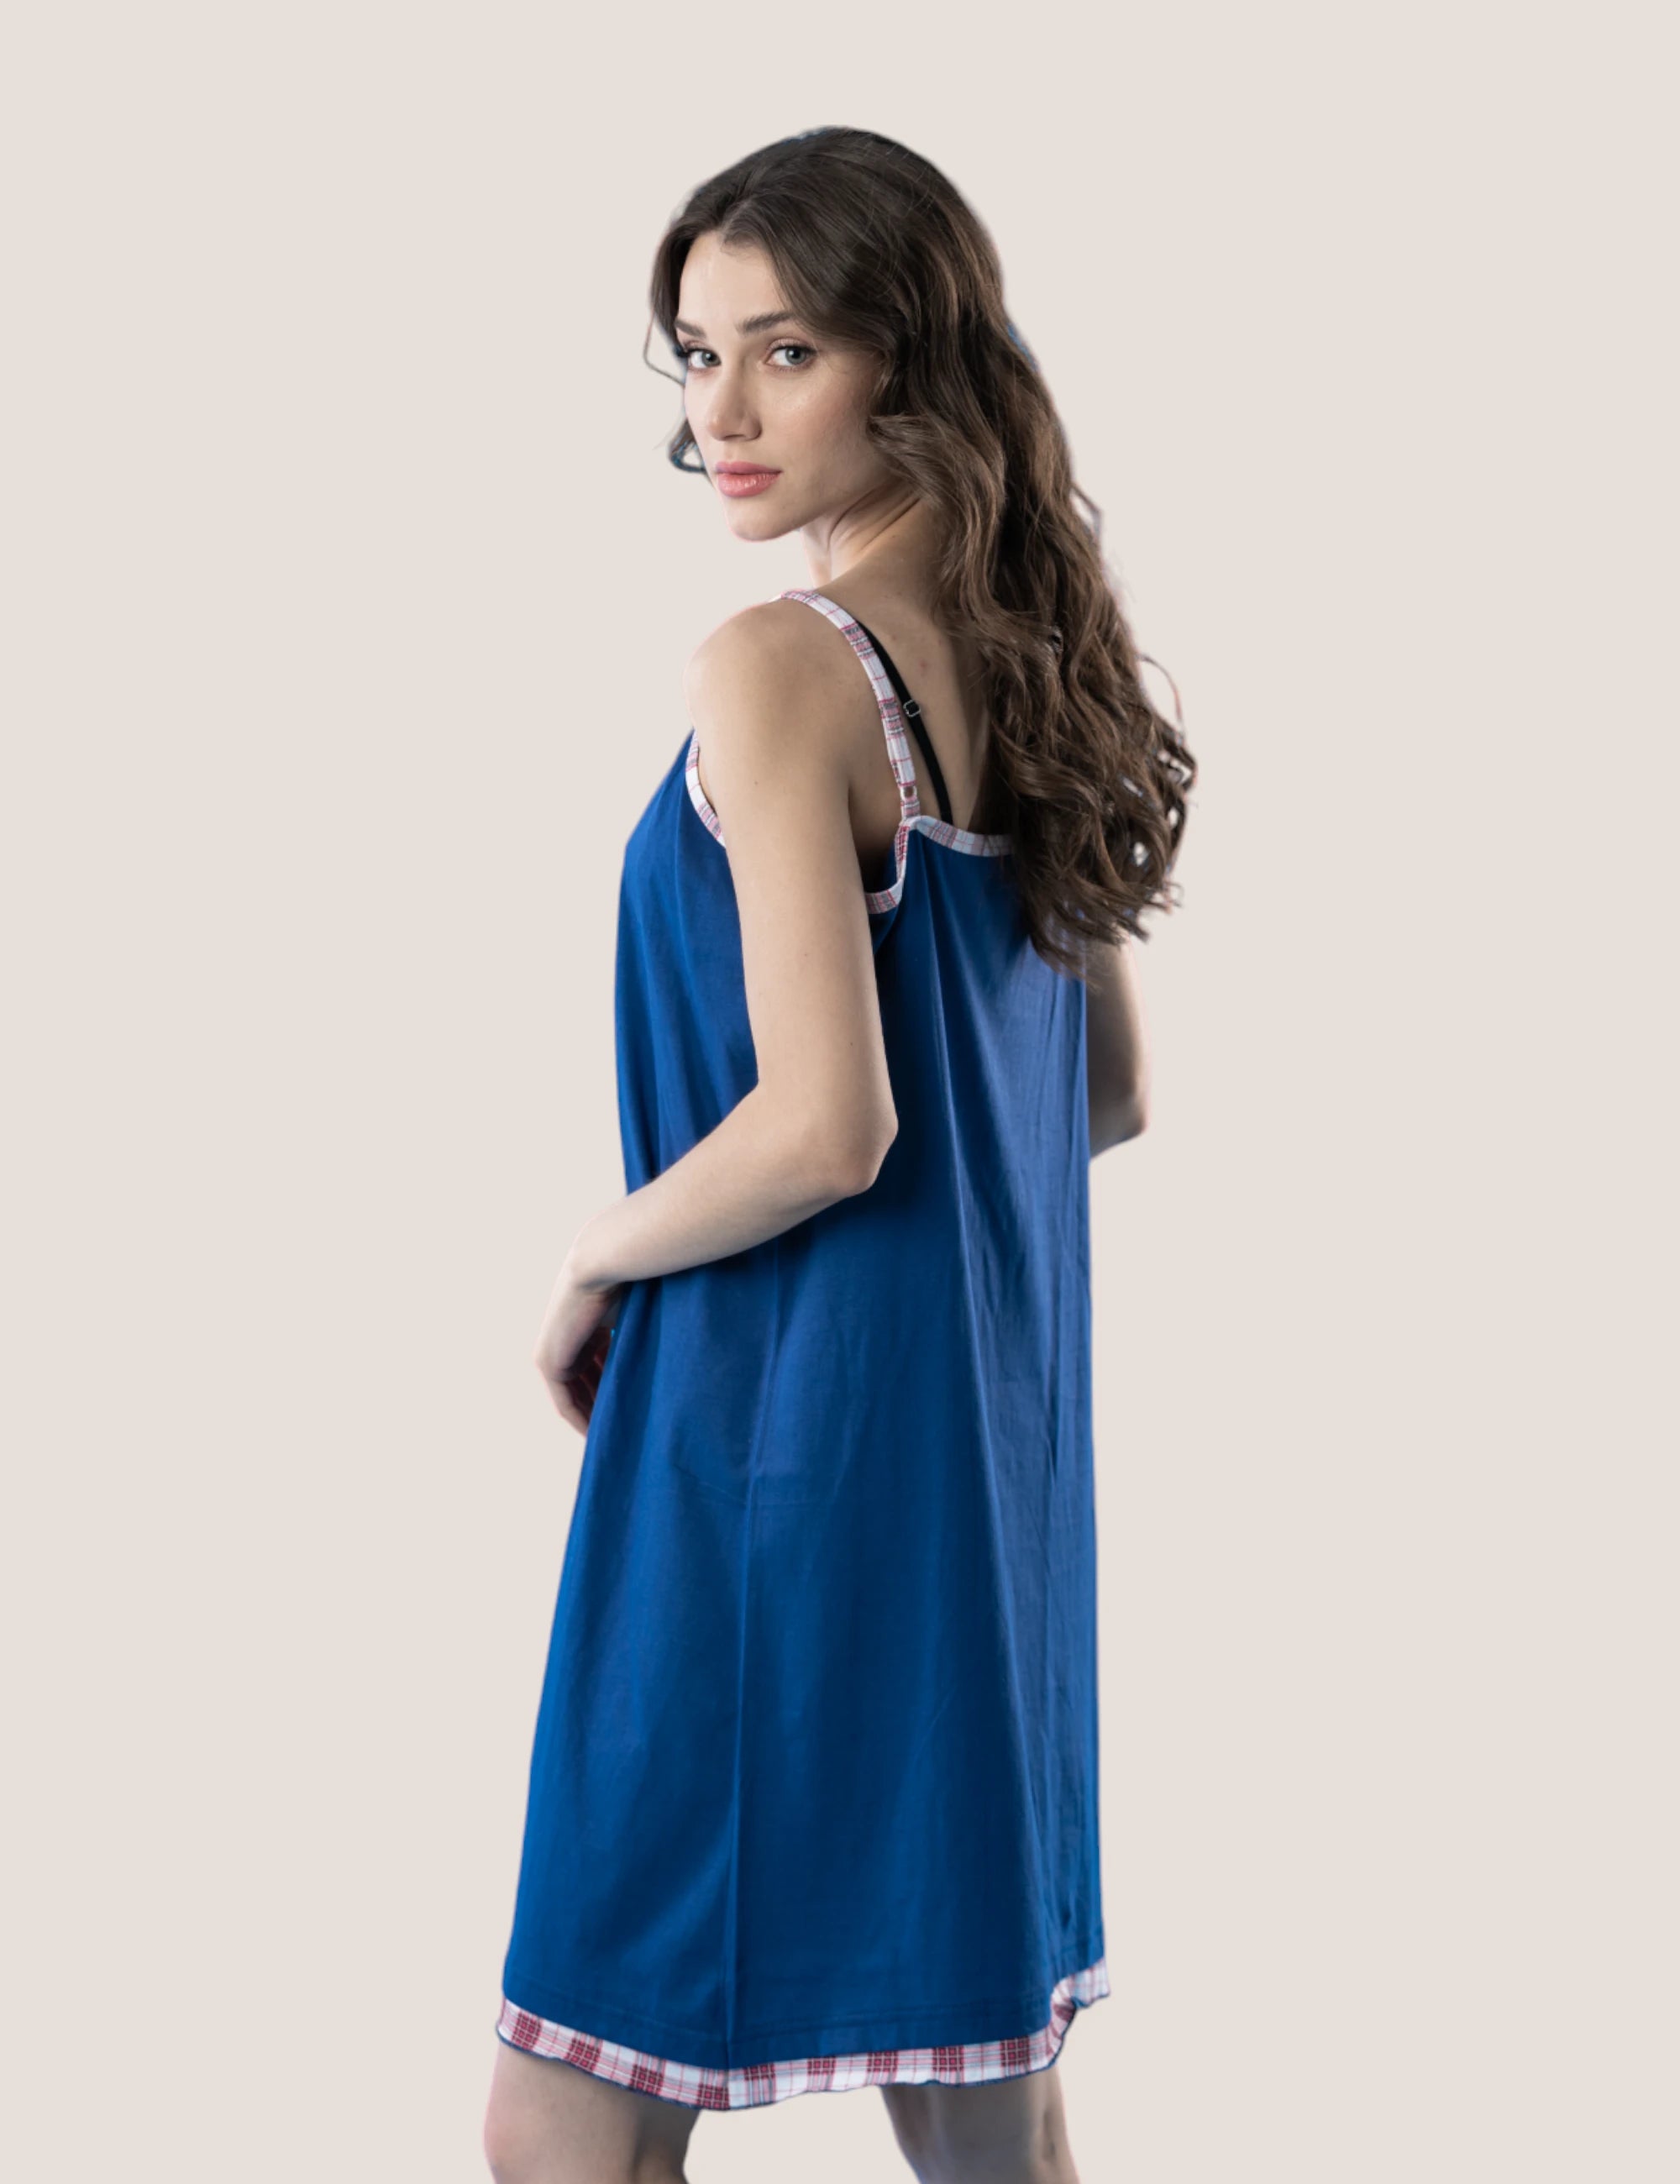 Blue Sheath dress